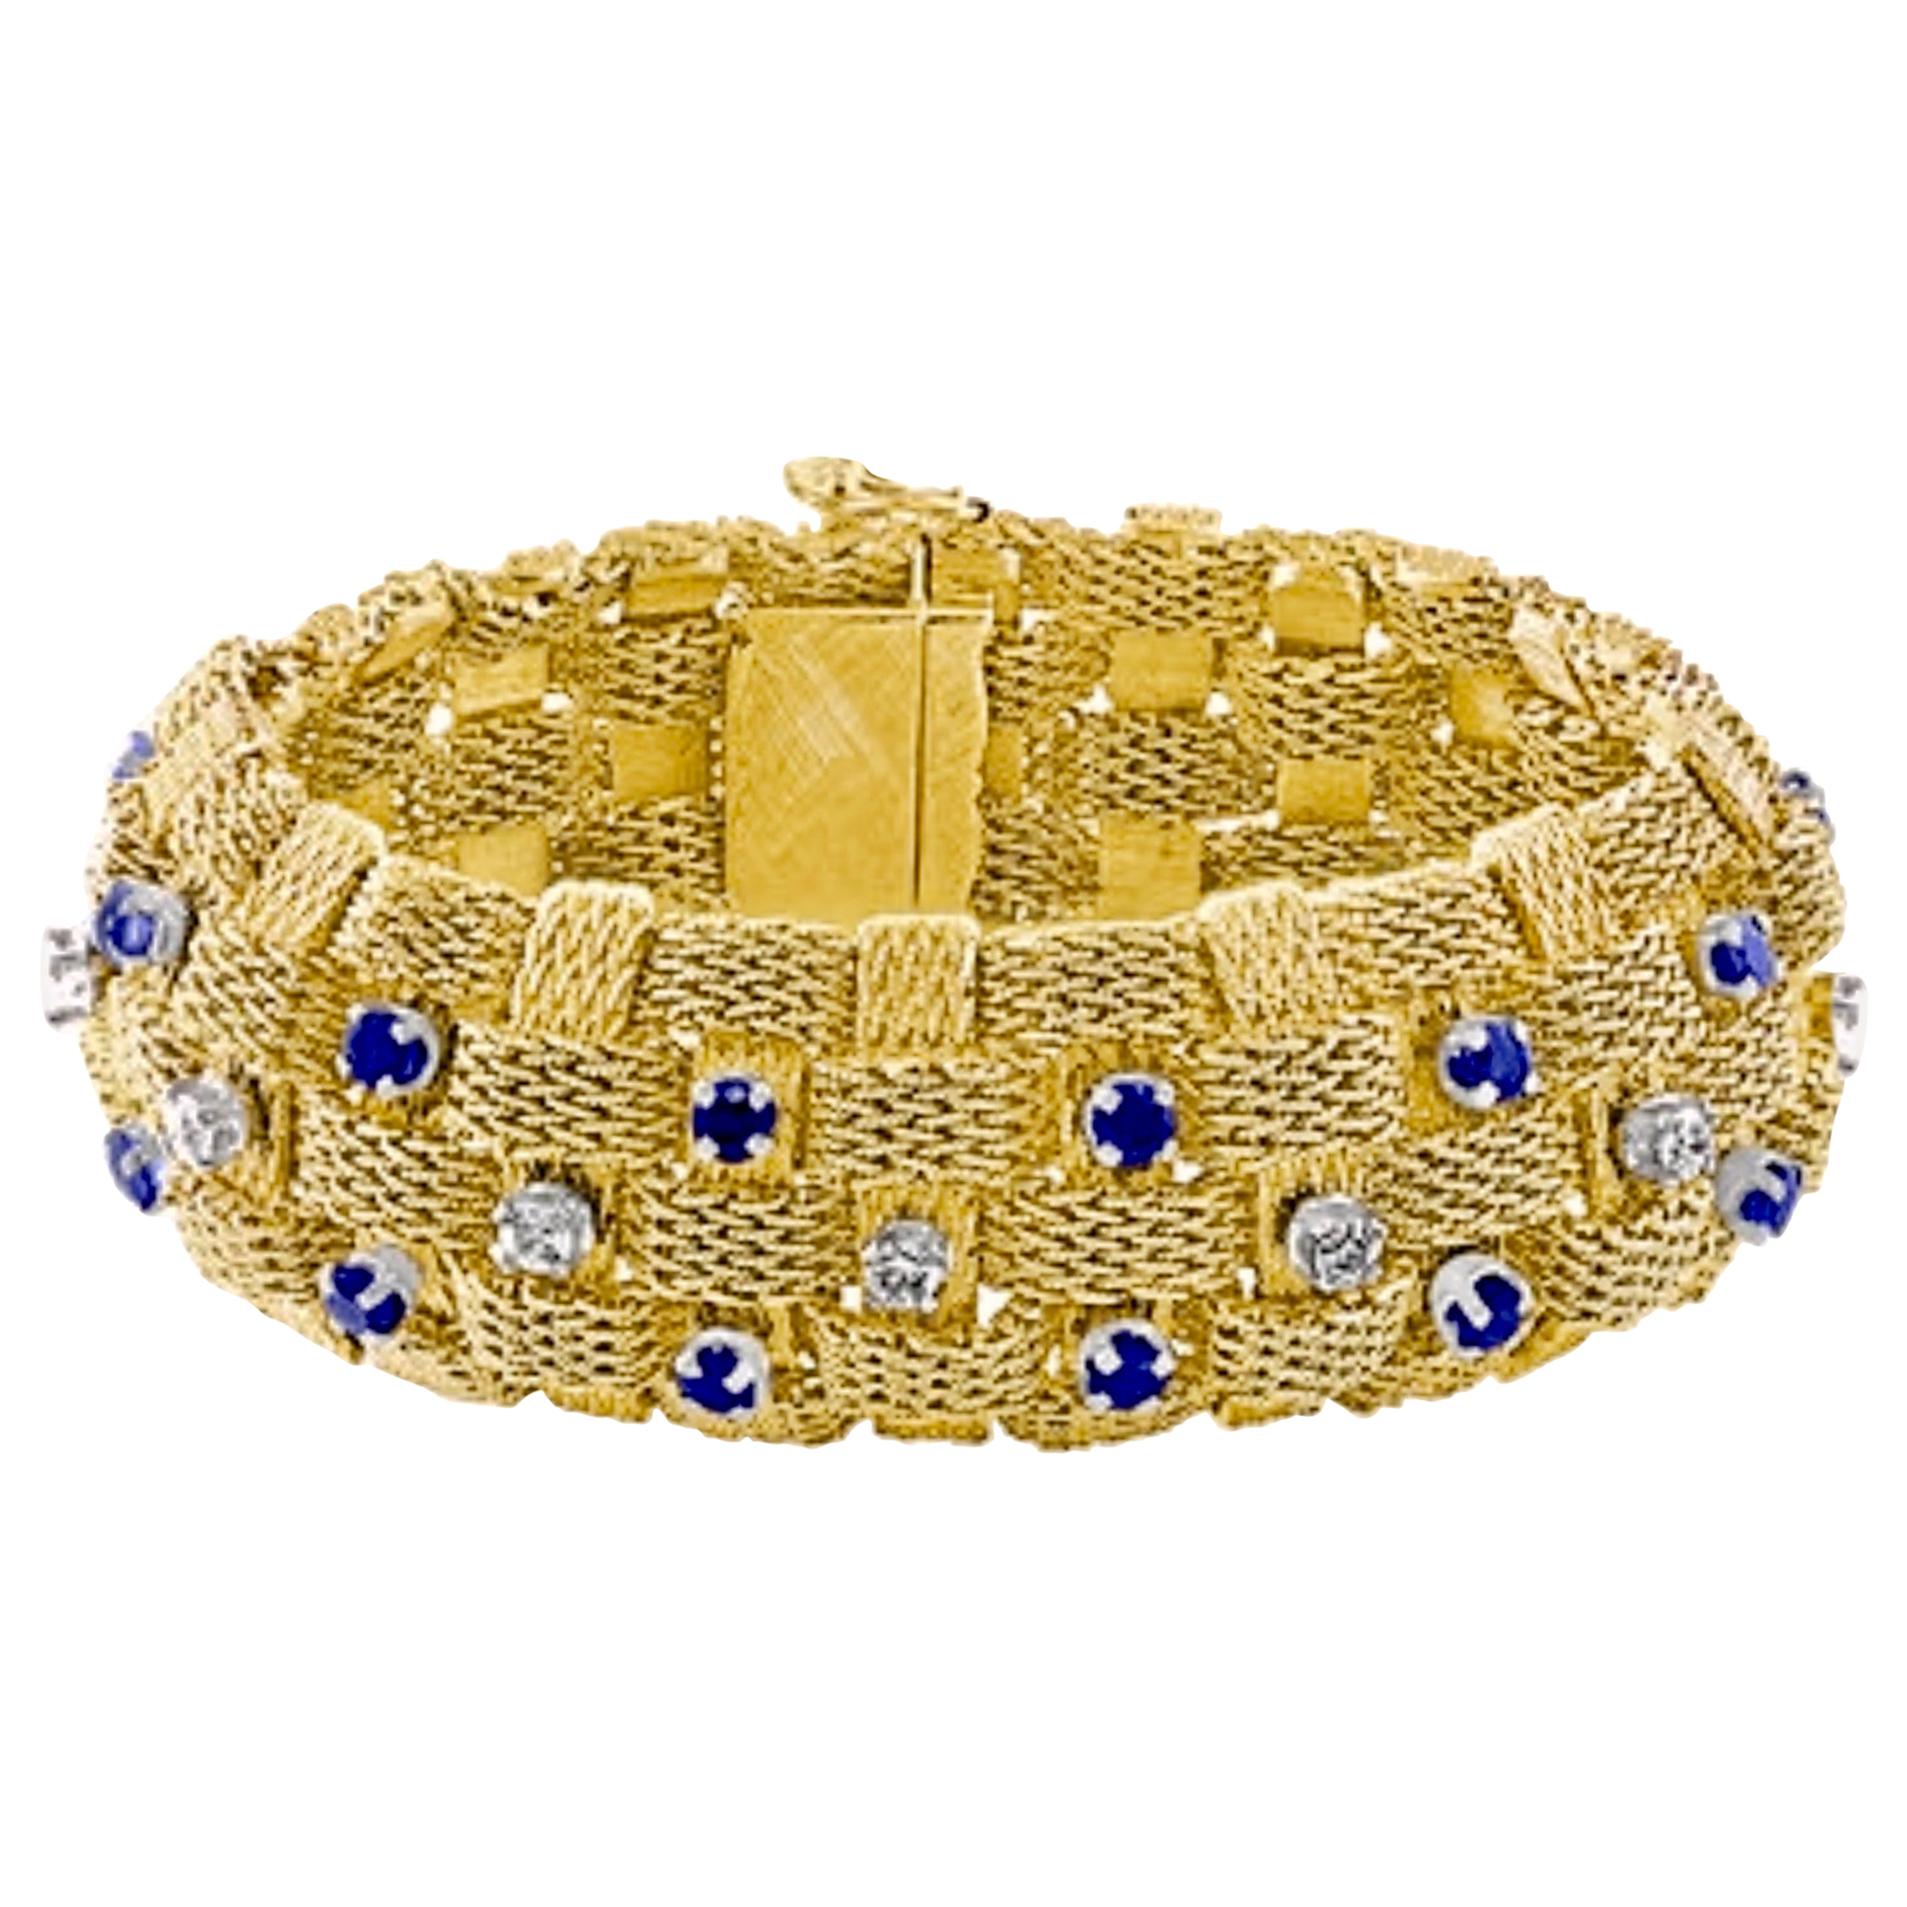 3 Carat Sapphire and 2 Carat Diamond Bracelet in 18 Karat Yellow Gold 116 Gm